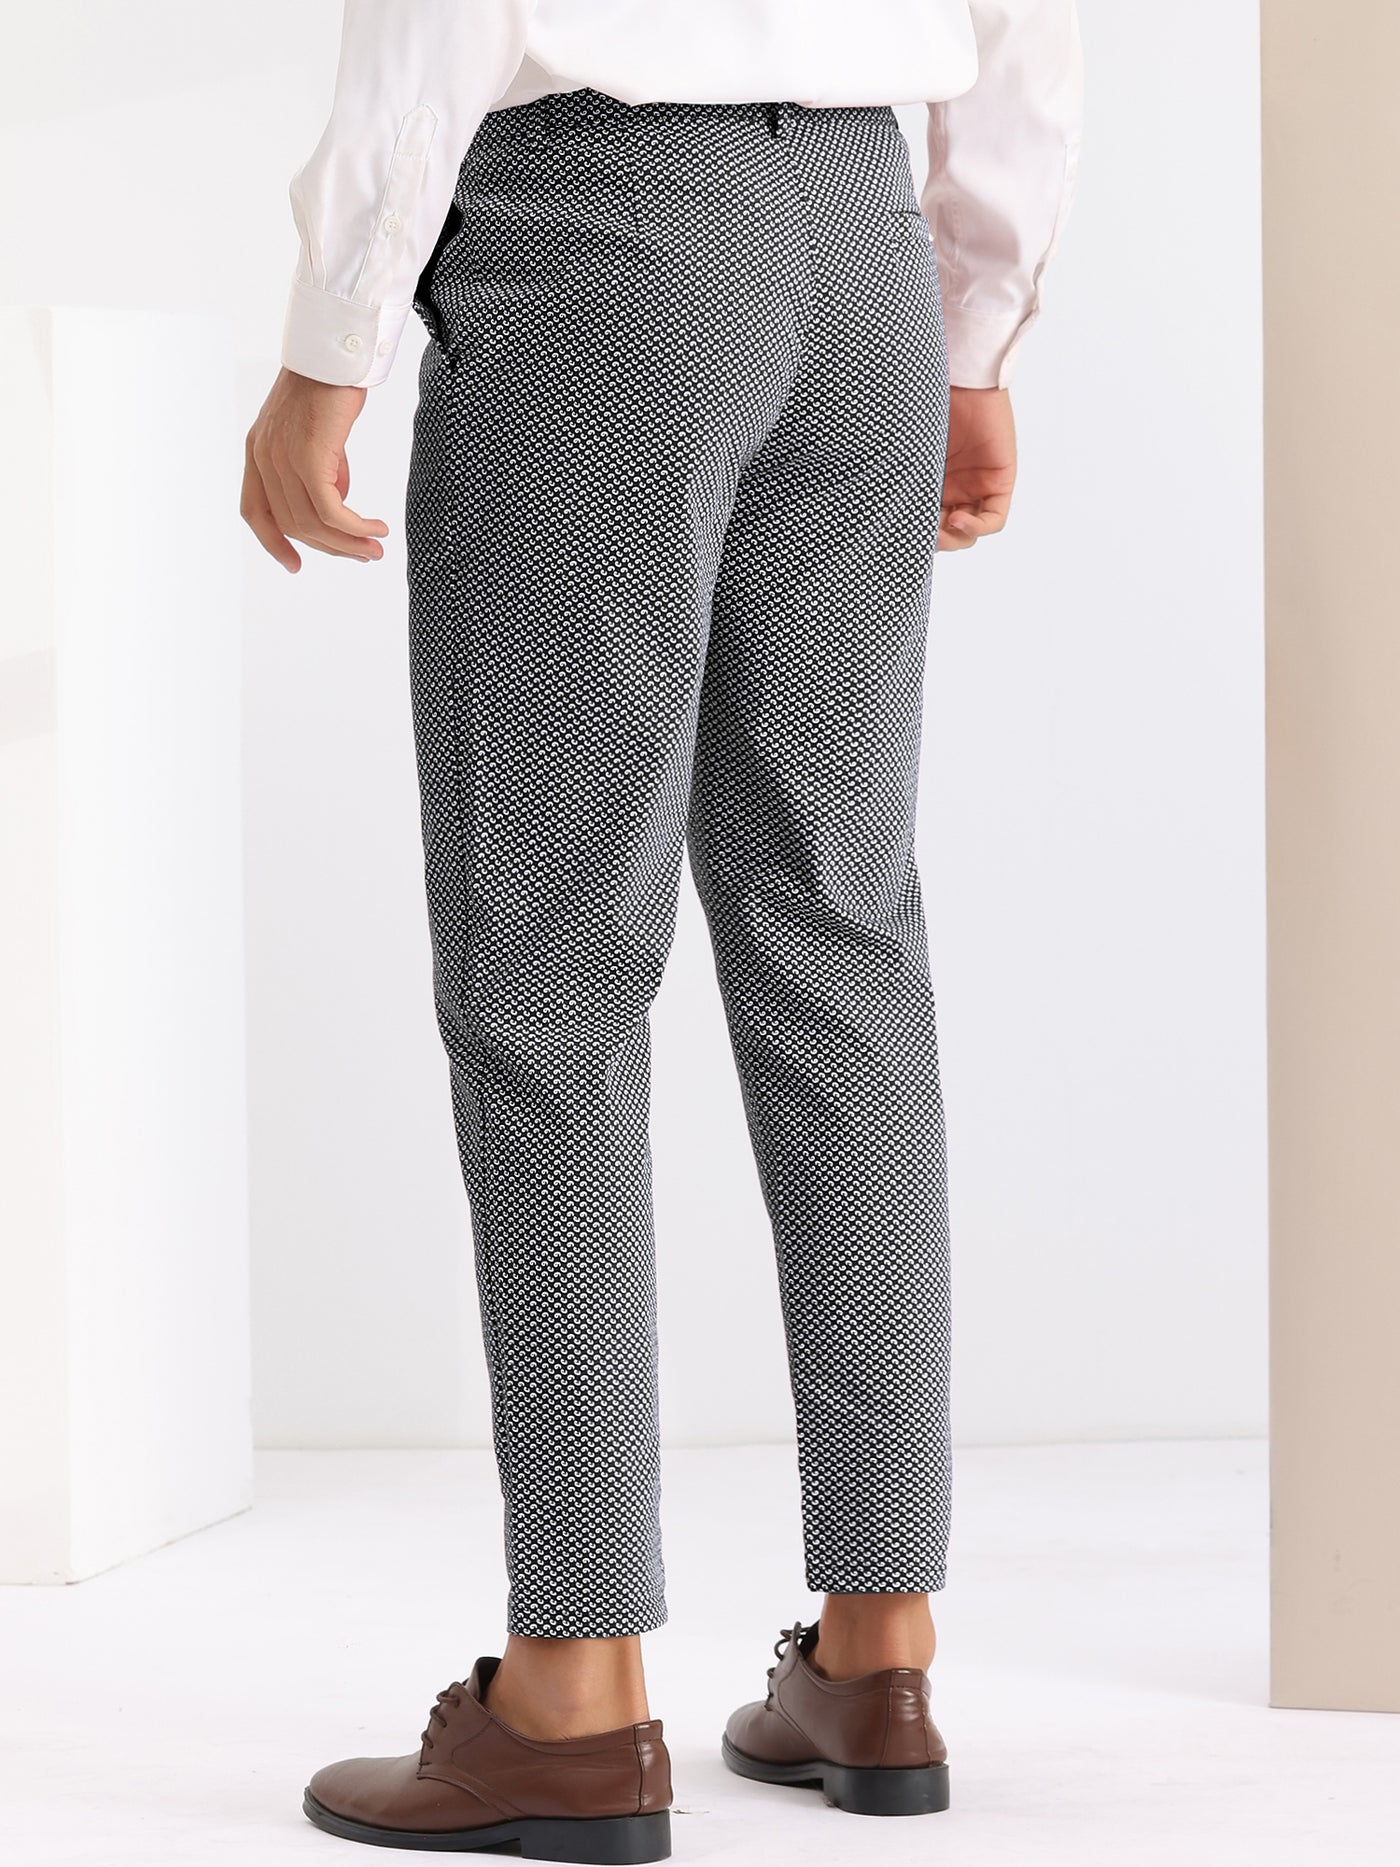 Bublédon Dots Pattern Printed Dress Pants for Men's Slim Fit Flat Front Trouser